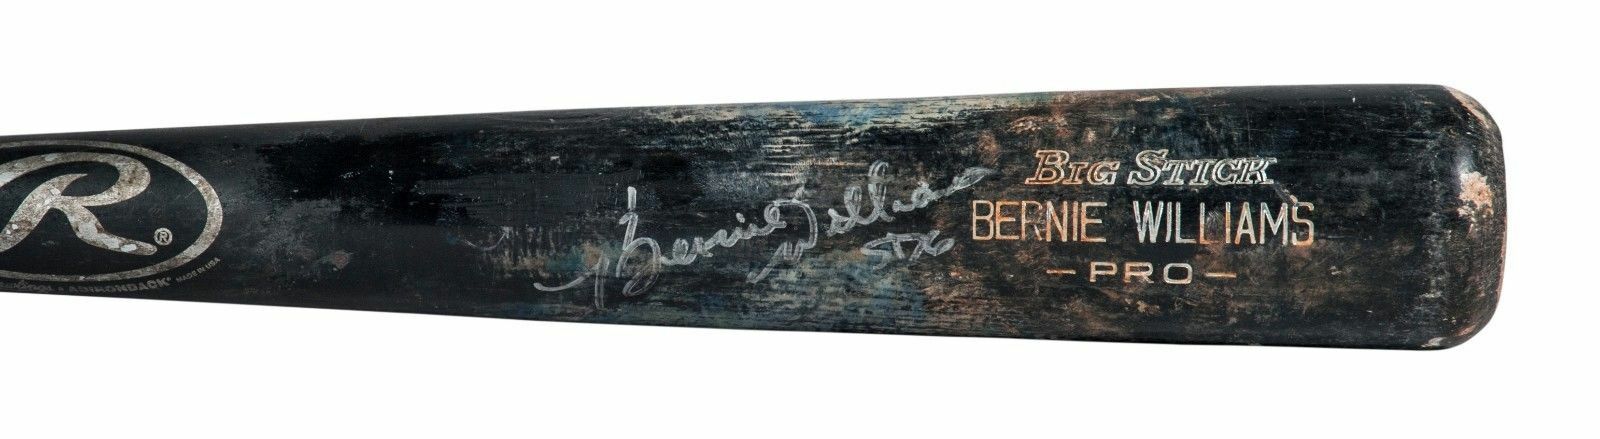 Incredible 2003 Bernie Williams Signed Game Used Baseball Bat PSA DNA GU 10!